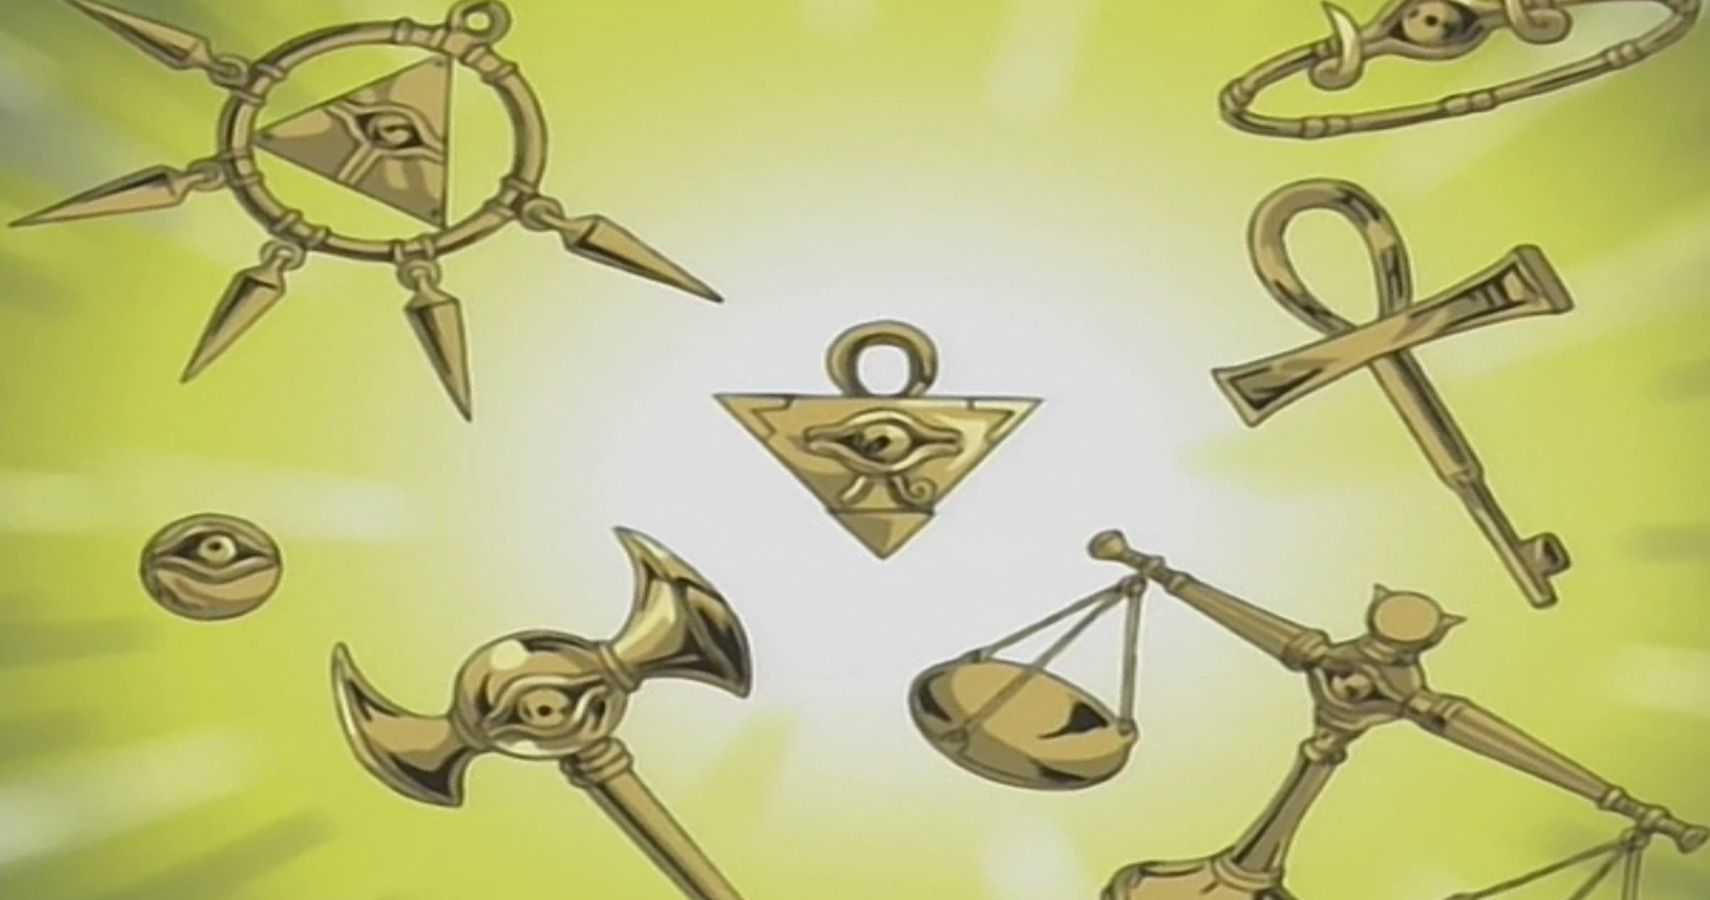 haak Aubergine zich zorgen maken Yu-Gi-Oh: Every Millennium Item, Ranked (In Terms Of Power)